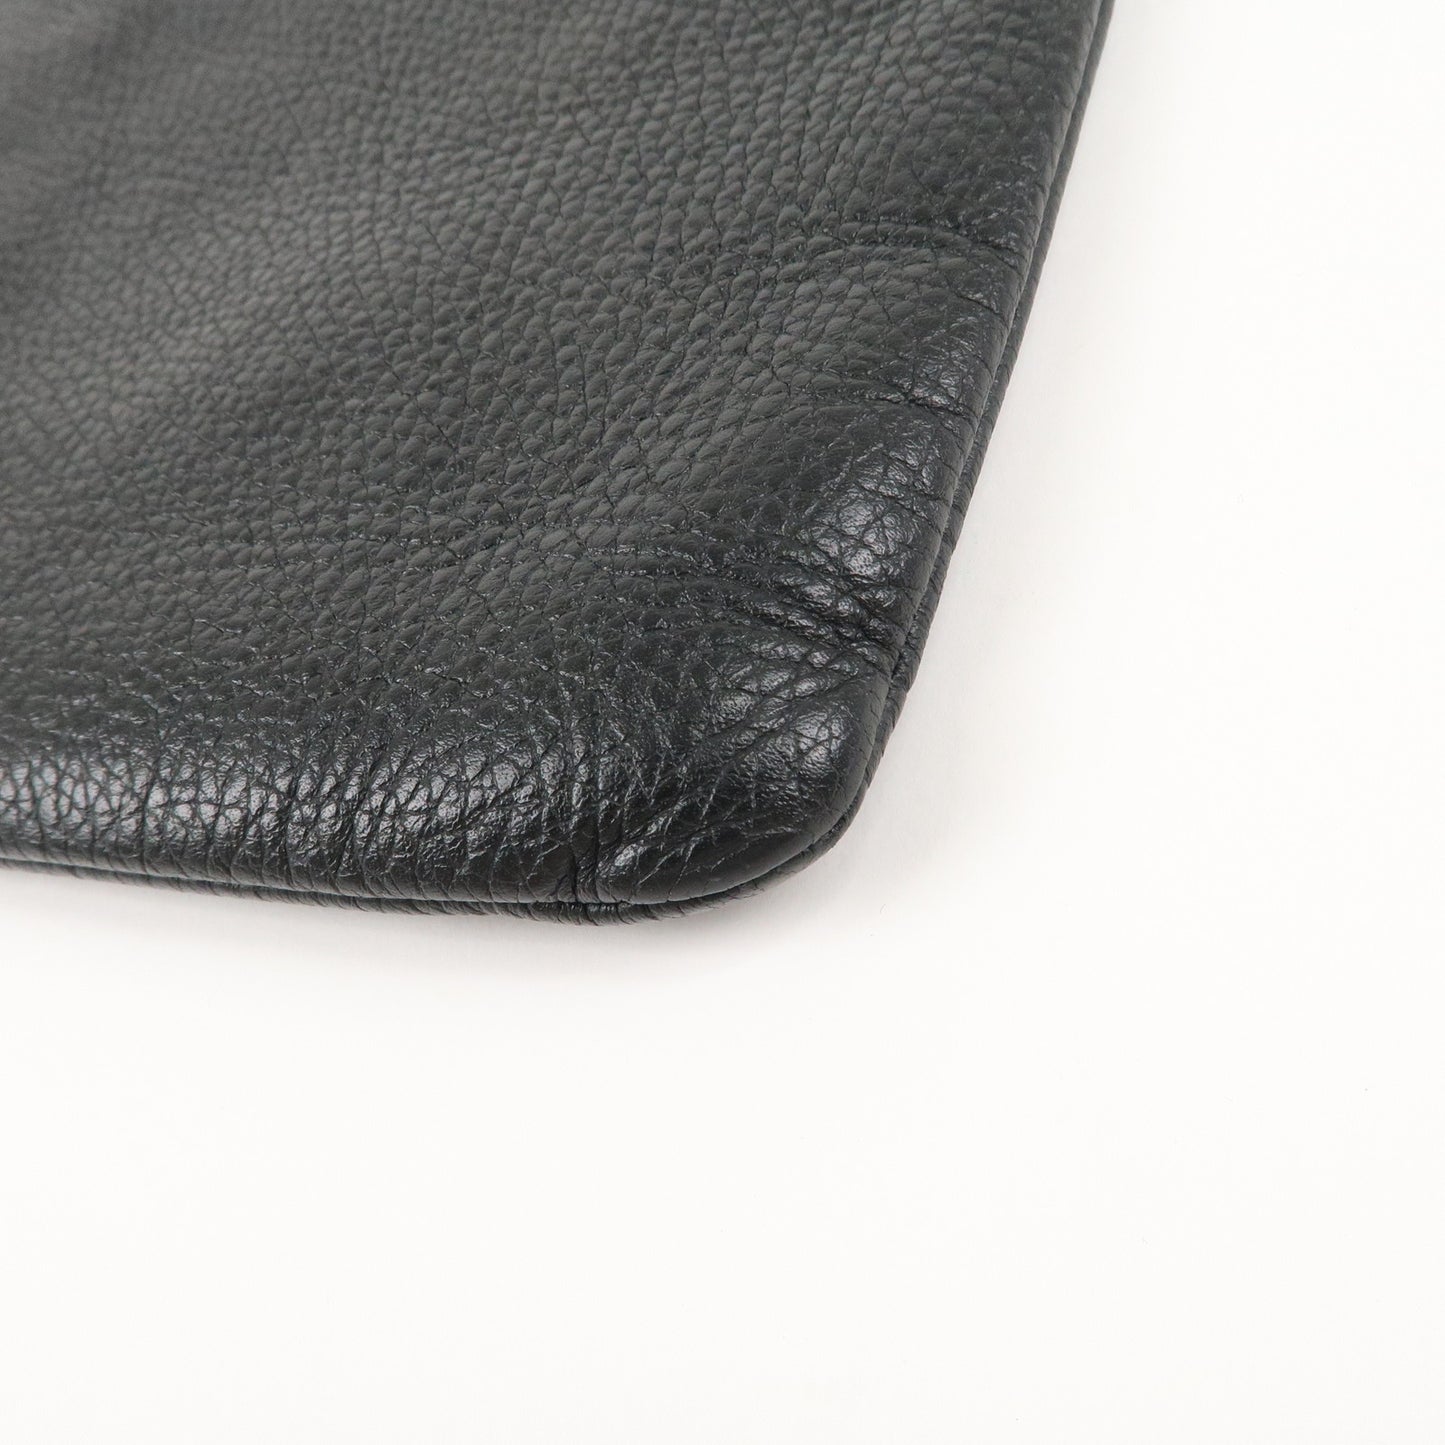 GUCCI Bamboo Leather Clutch Bag Black 449653